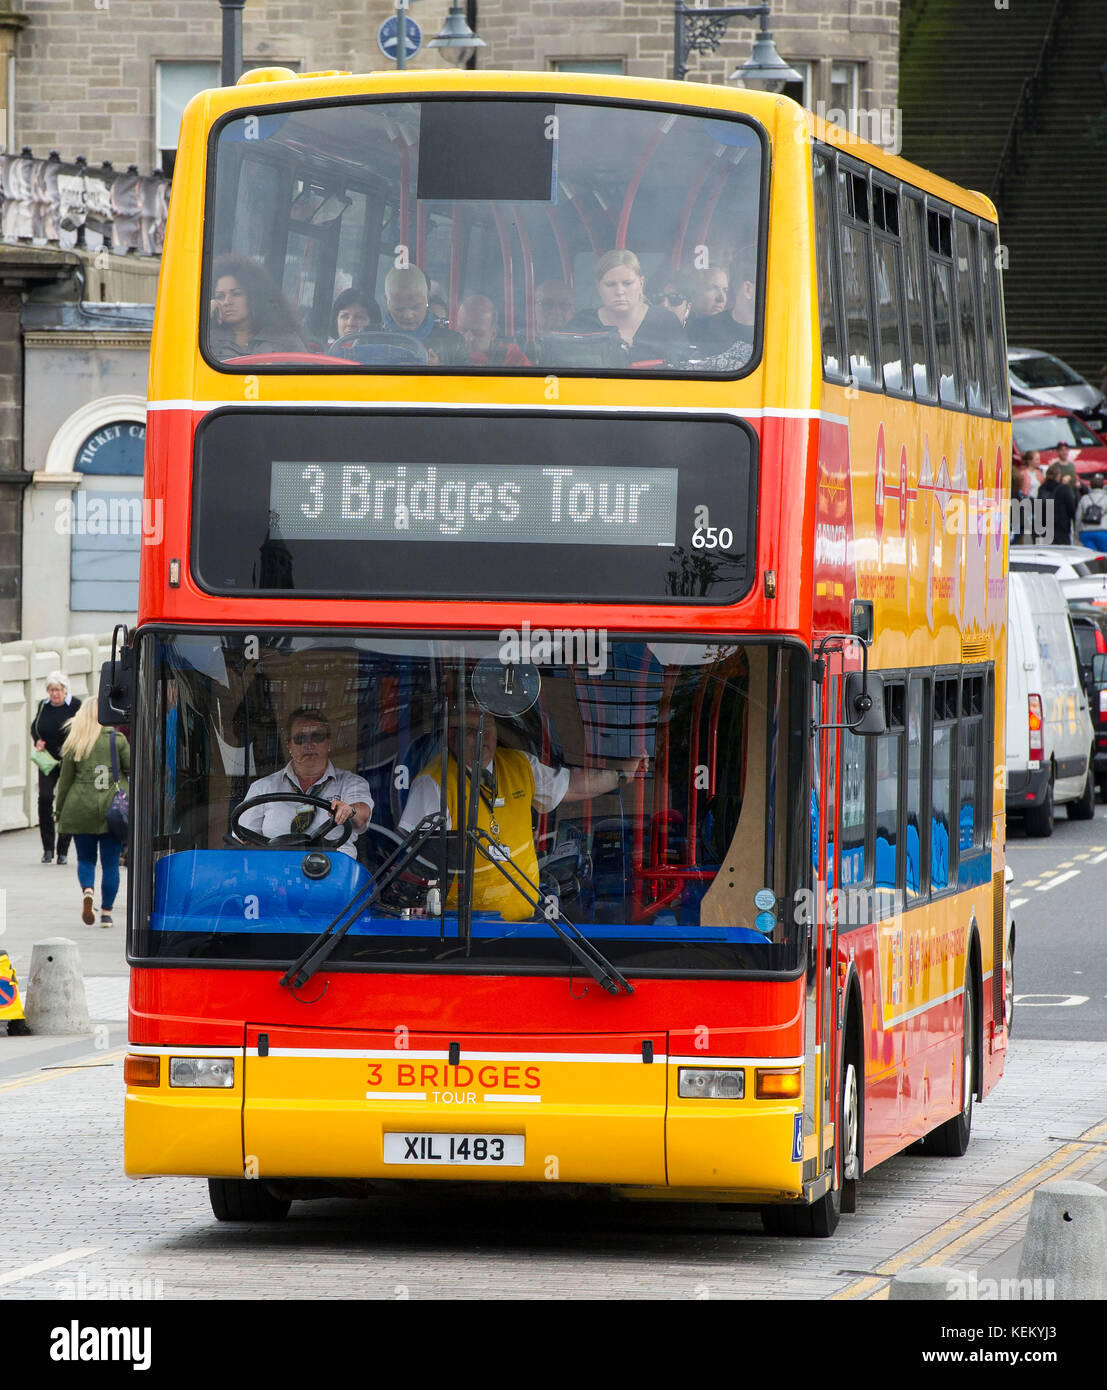 Three Bridges double decker tourist bus arrives at Waverley Bridge in Edinburgh. The new tourist route takes passengers to see the the Forth Bridges. Stock Photo